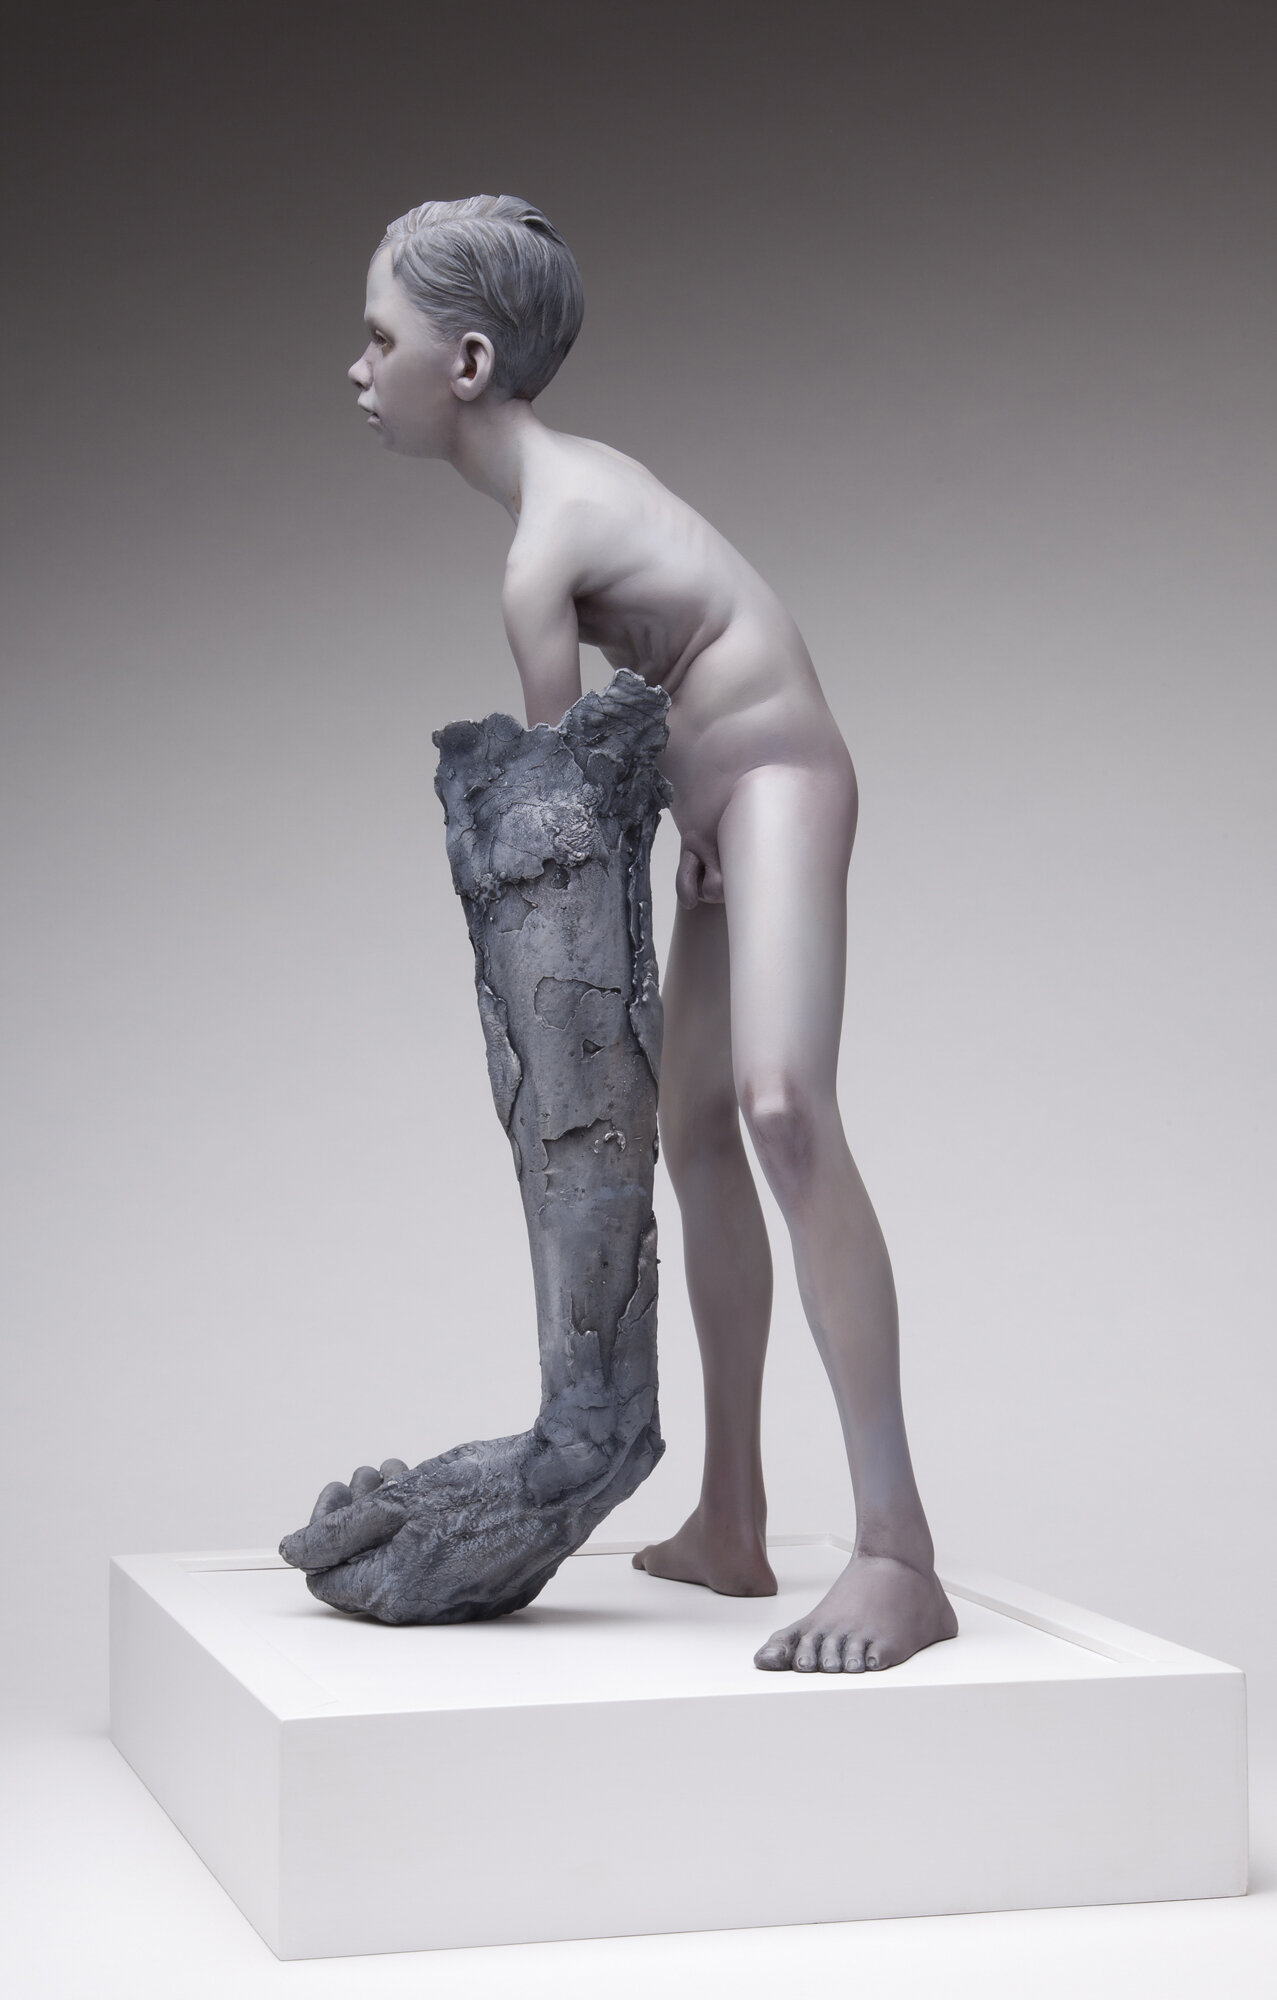 jesse-thompson-sculpture-longarm-dress-Up 02.jpg